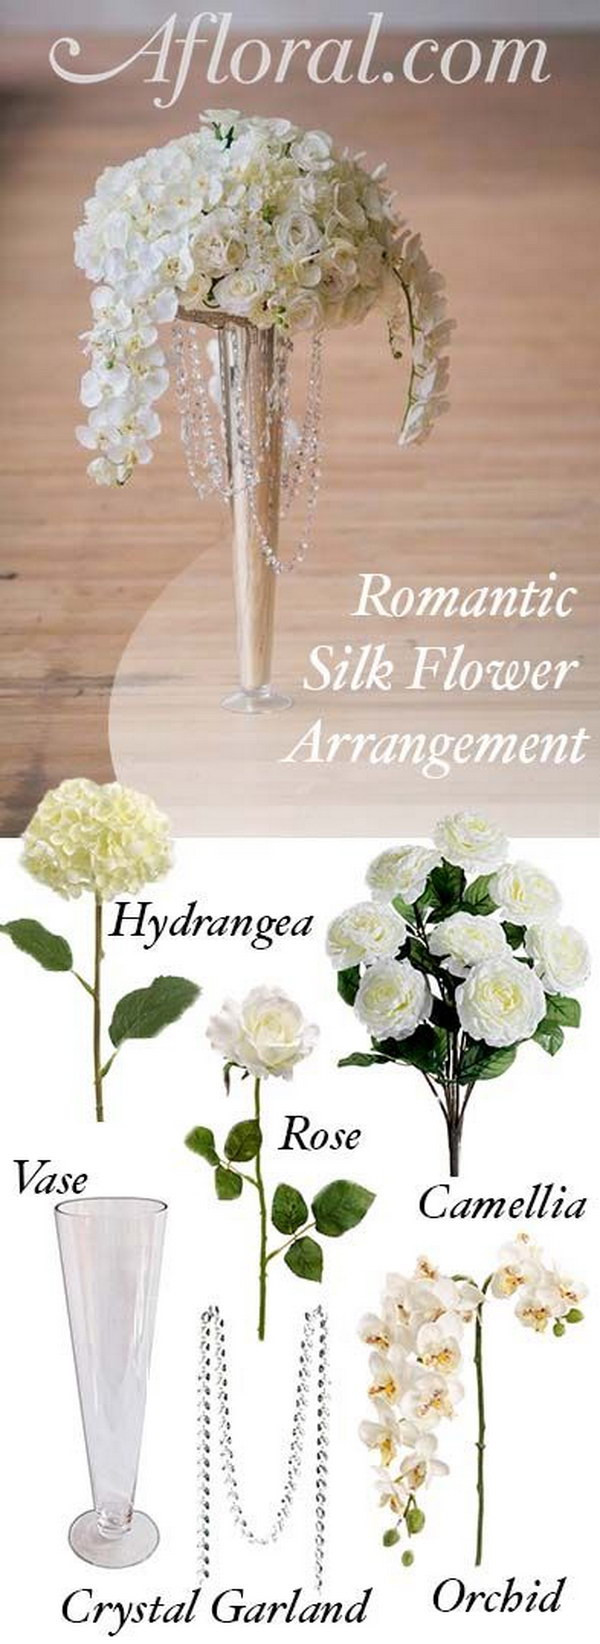 DIY Flower Arrangements For Wedding
 Awesome DIY Wedding Centerpiece Ideas & Tutorials